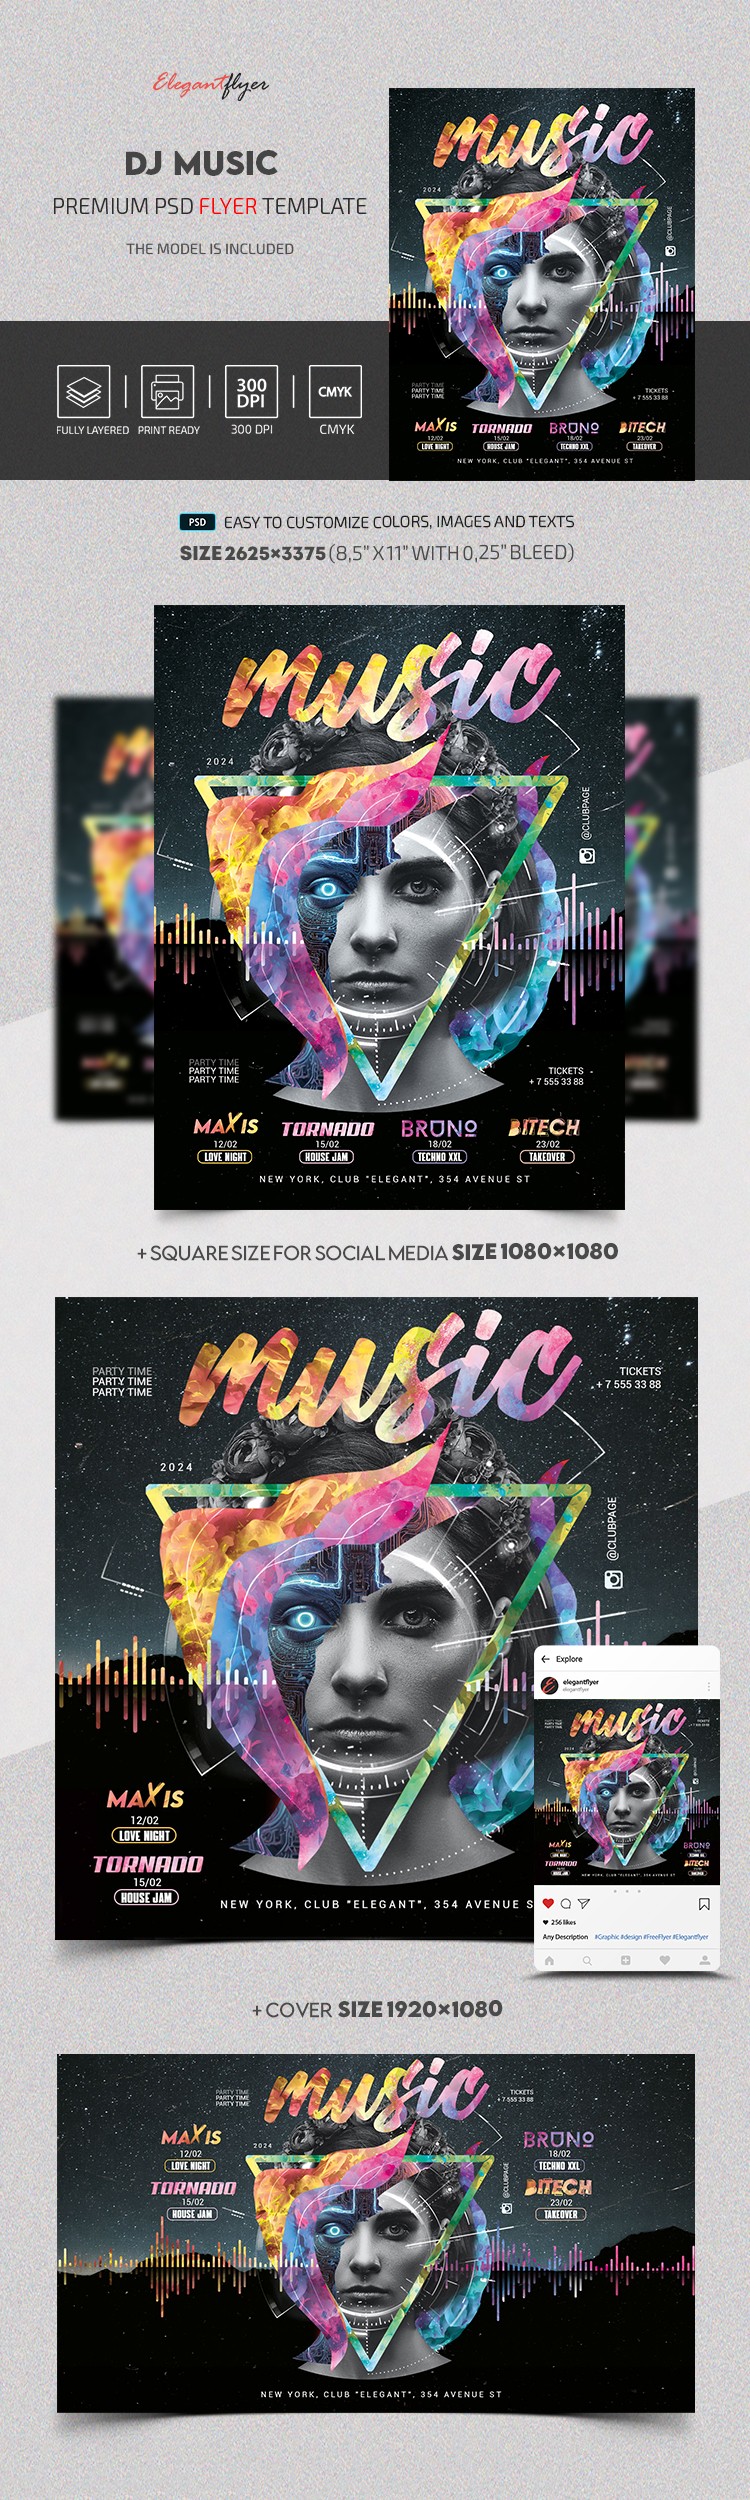 Soirée musicale DJ by ElegantFlyer